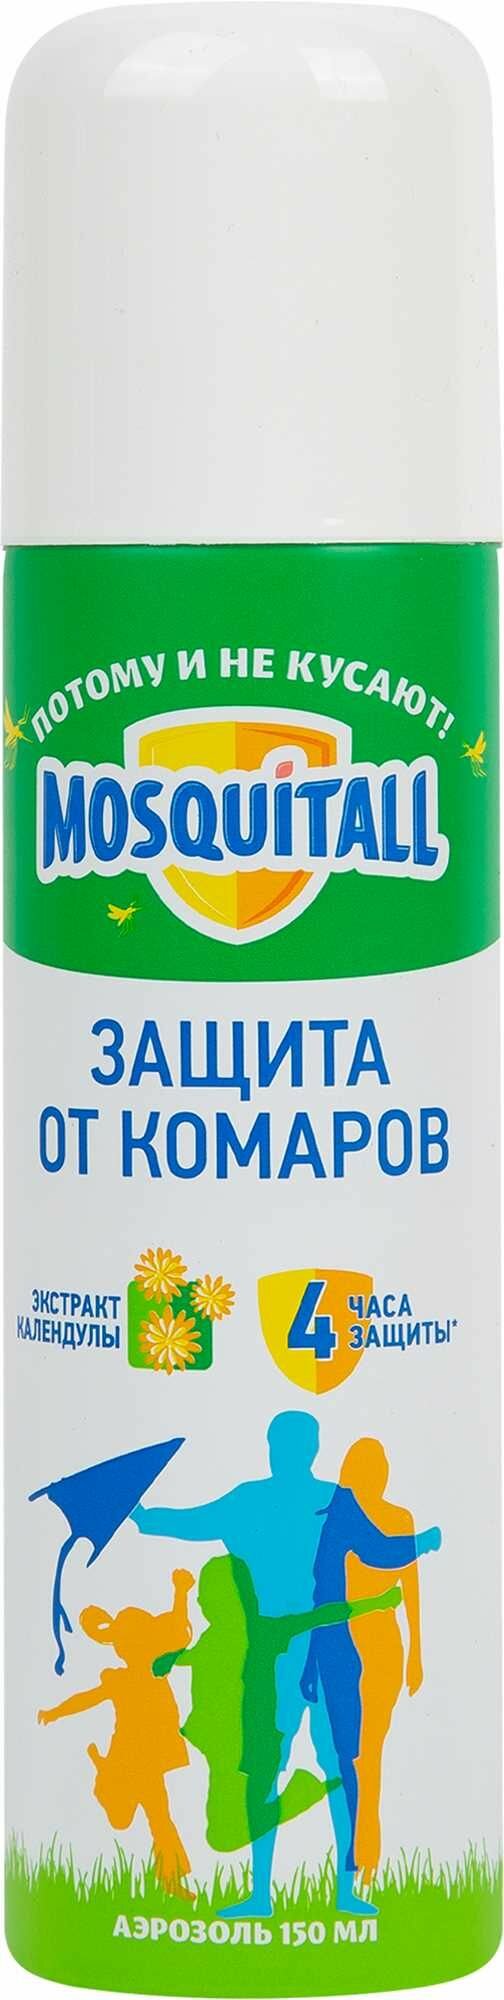 Аэрозоль от комаров Mosquitall 4 часа защиты 150 мл